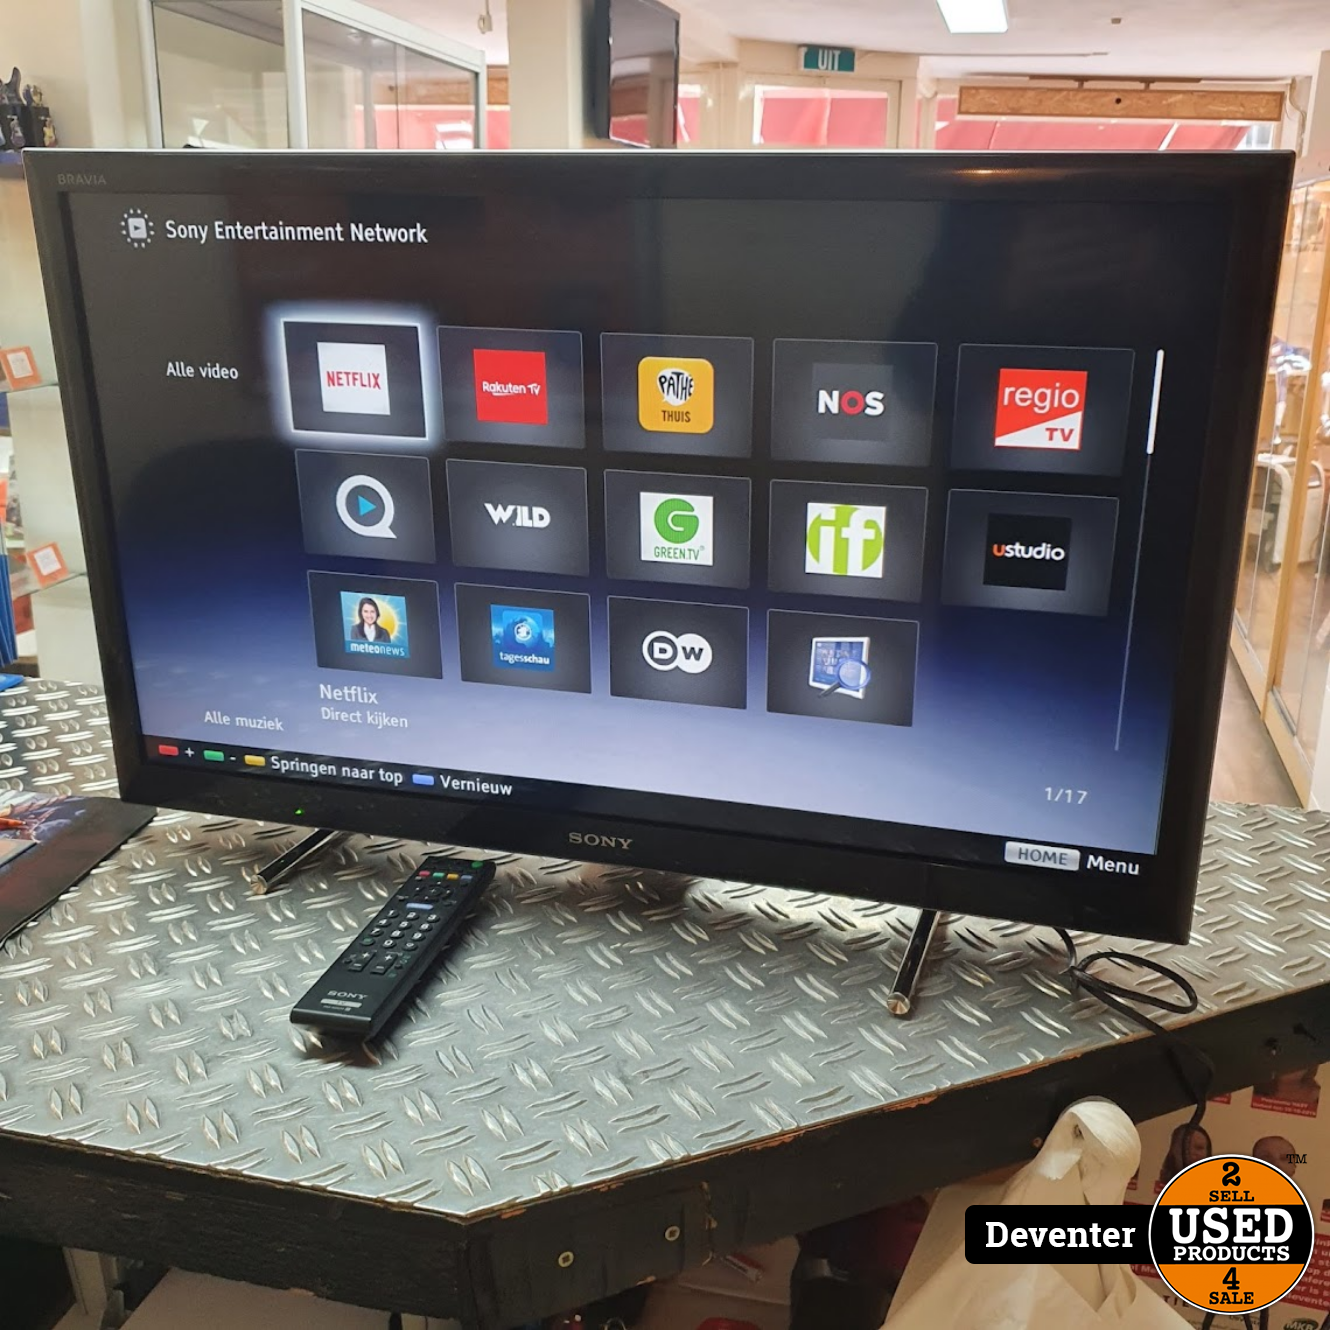 Sony KDL-32EX650 Smart TV met WiFi 81 CM Used Deventer